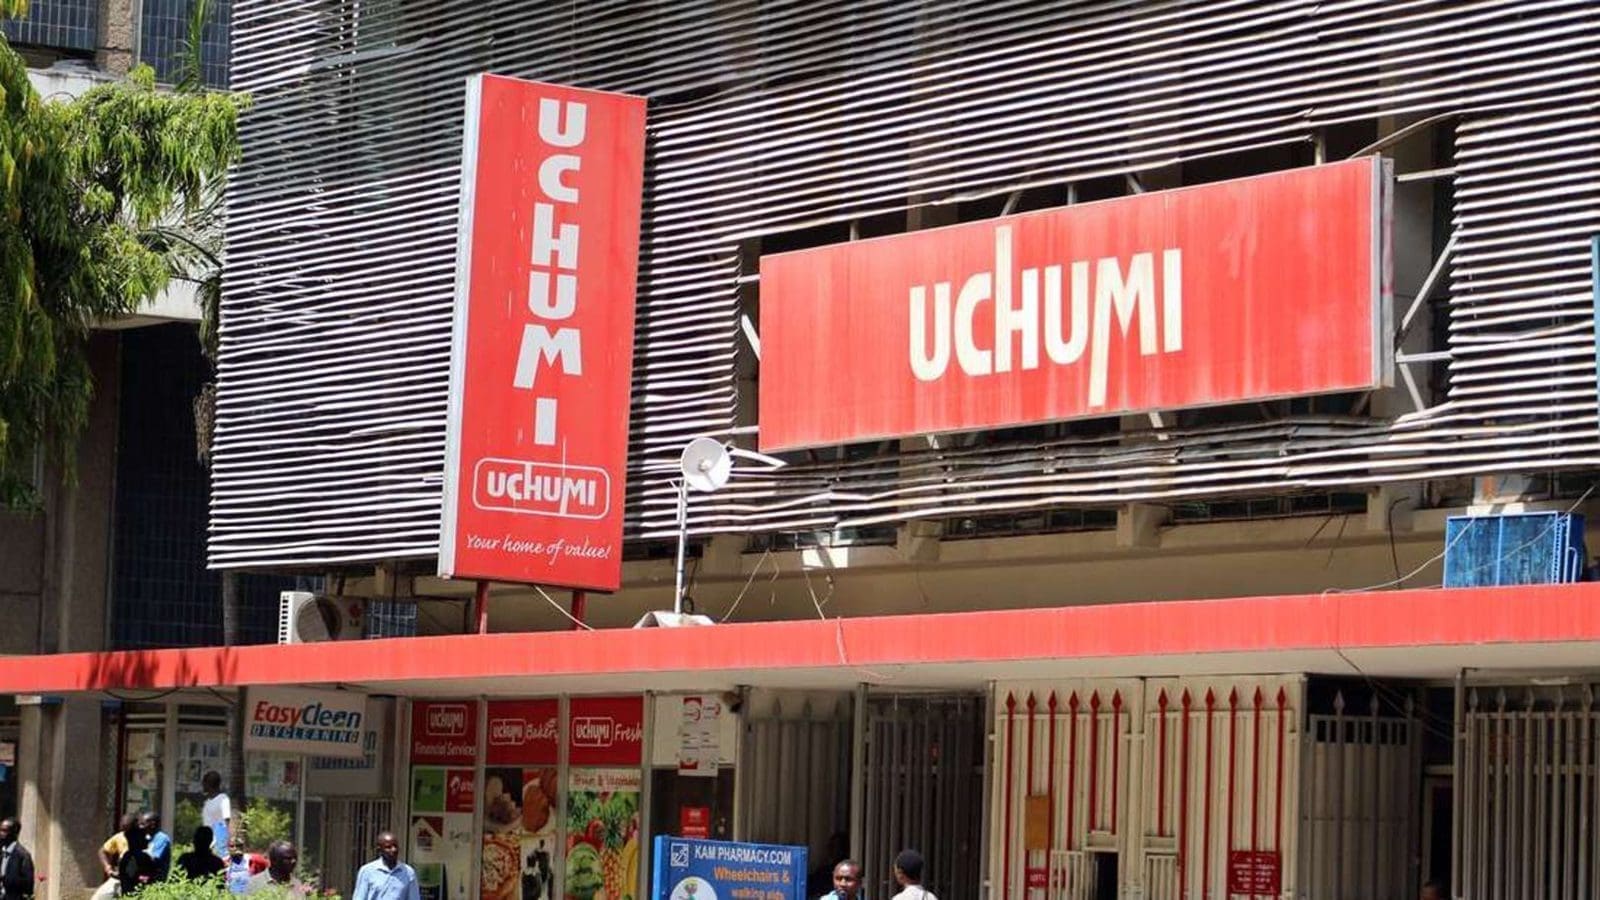 Naivas takes over spaces left by financially struggling Uchumi, collapsed Nakumatt supermarkets